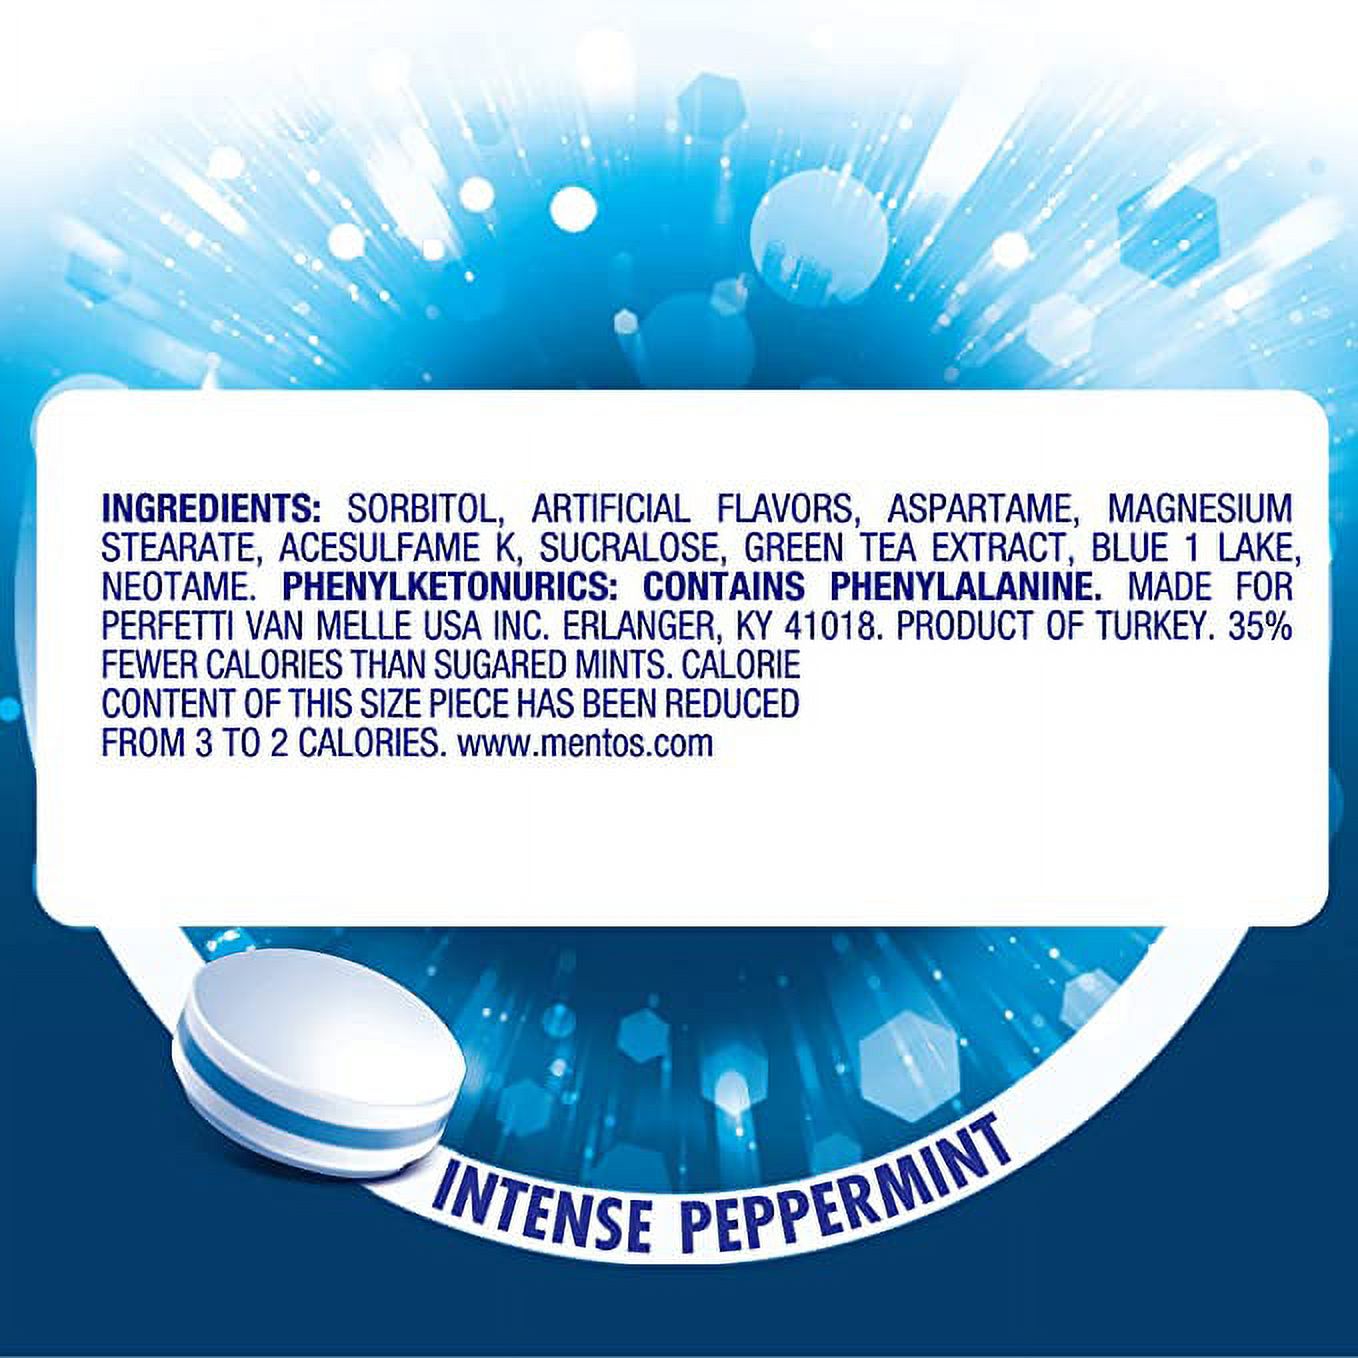 Mentos Clean Breath Hard Mints, Peppermint, 0.74 oz - image 3 of 6